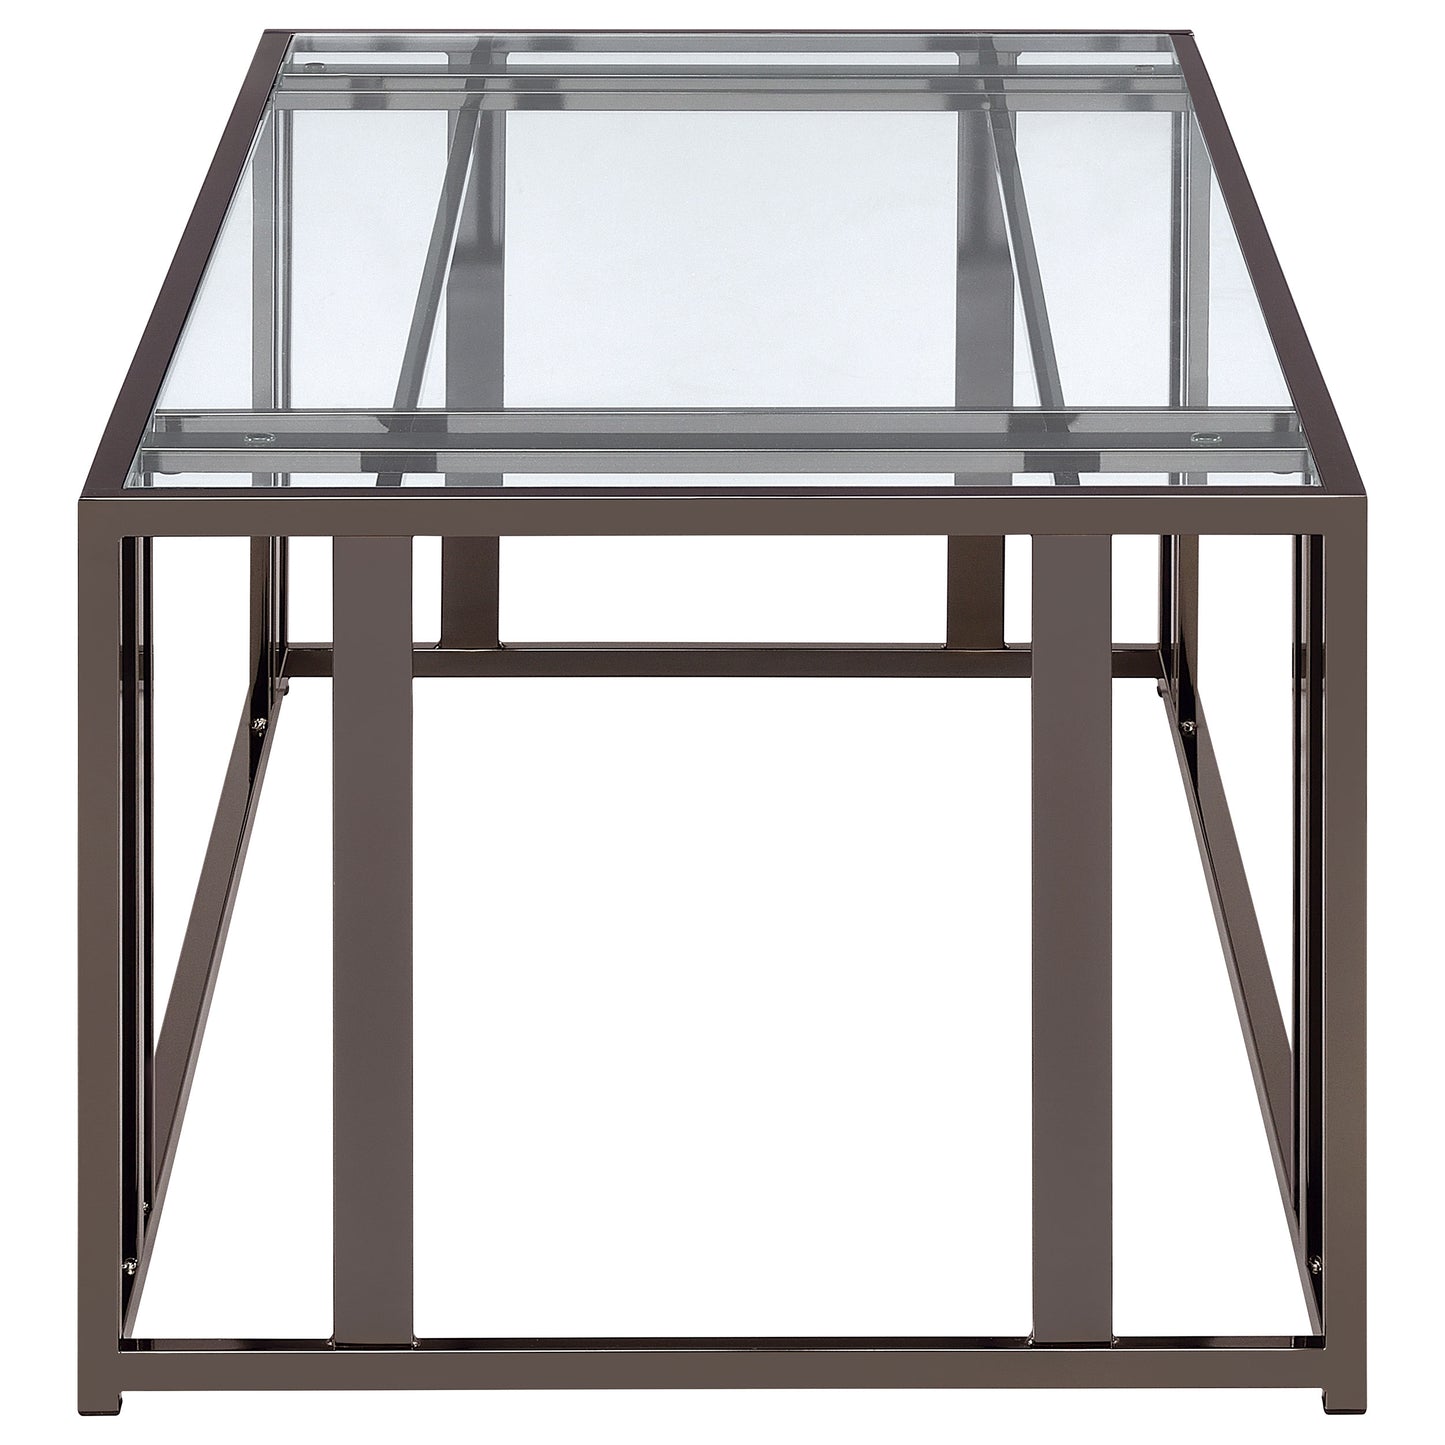 Adri Rectangular Glass Top Coffee Table Clear and Black Nickel